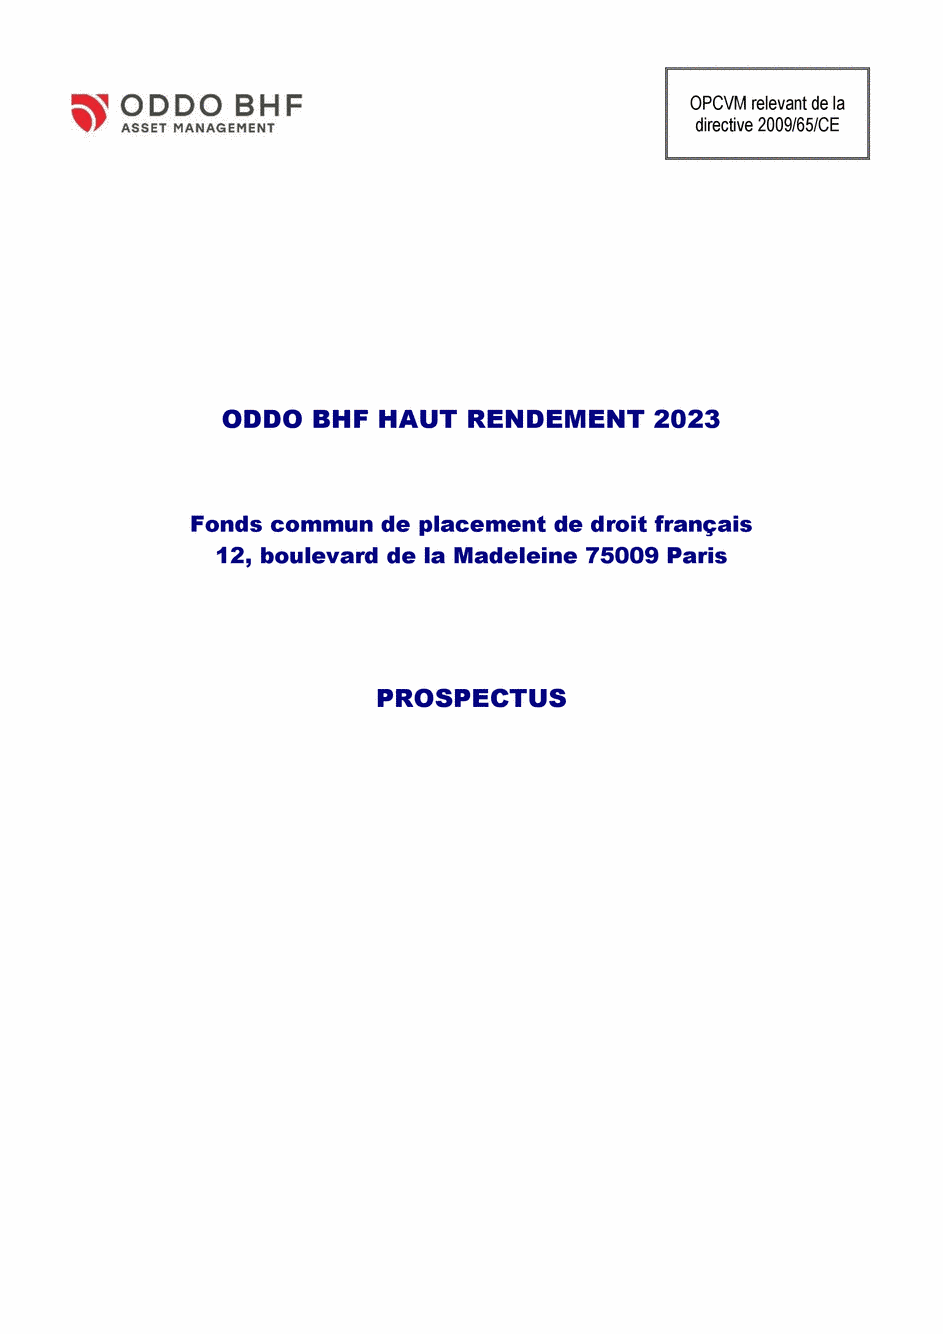 Prospectus ODDO BHF HAUT RENDEMENT 2023 CI-EUR - 25/09/2020 - Français